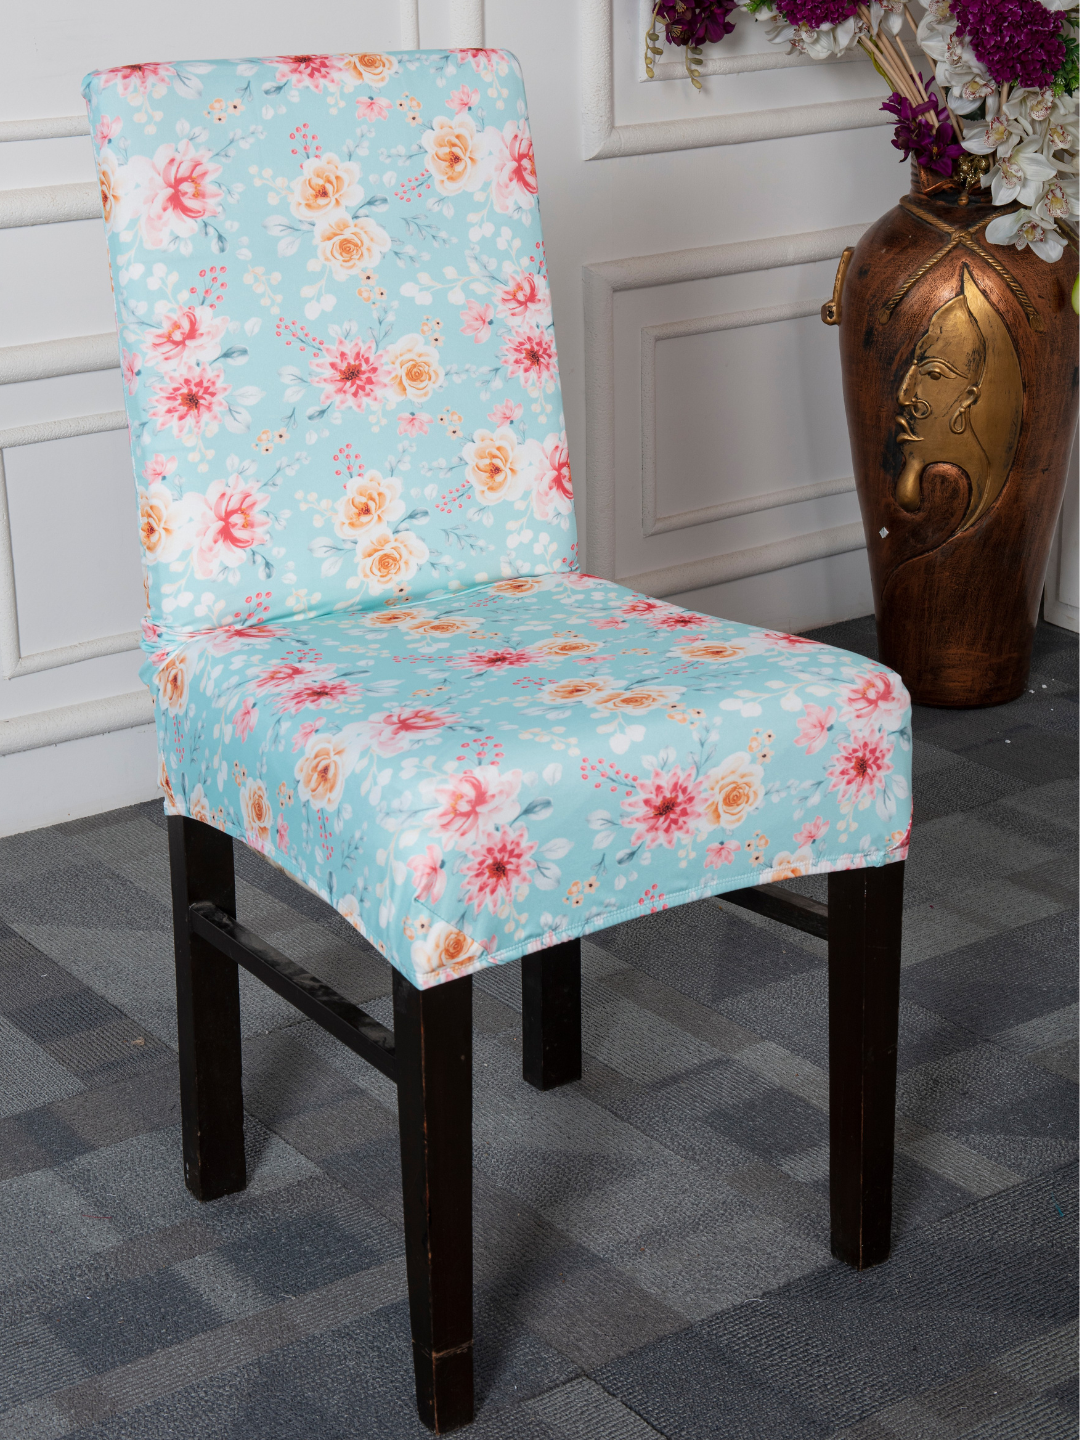 Summer Flower Design Chair Covers